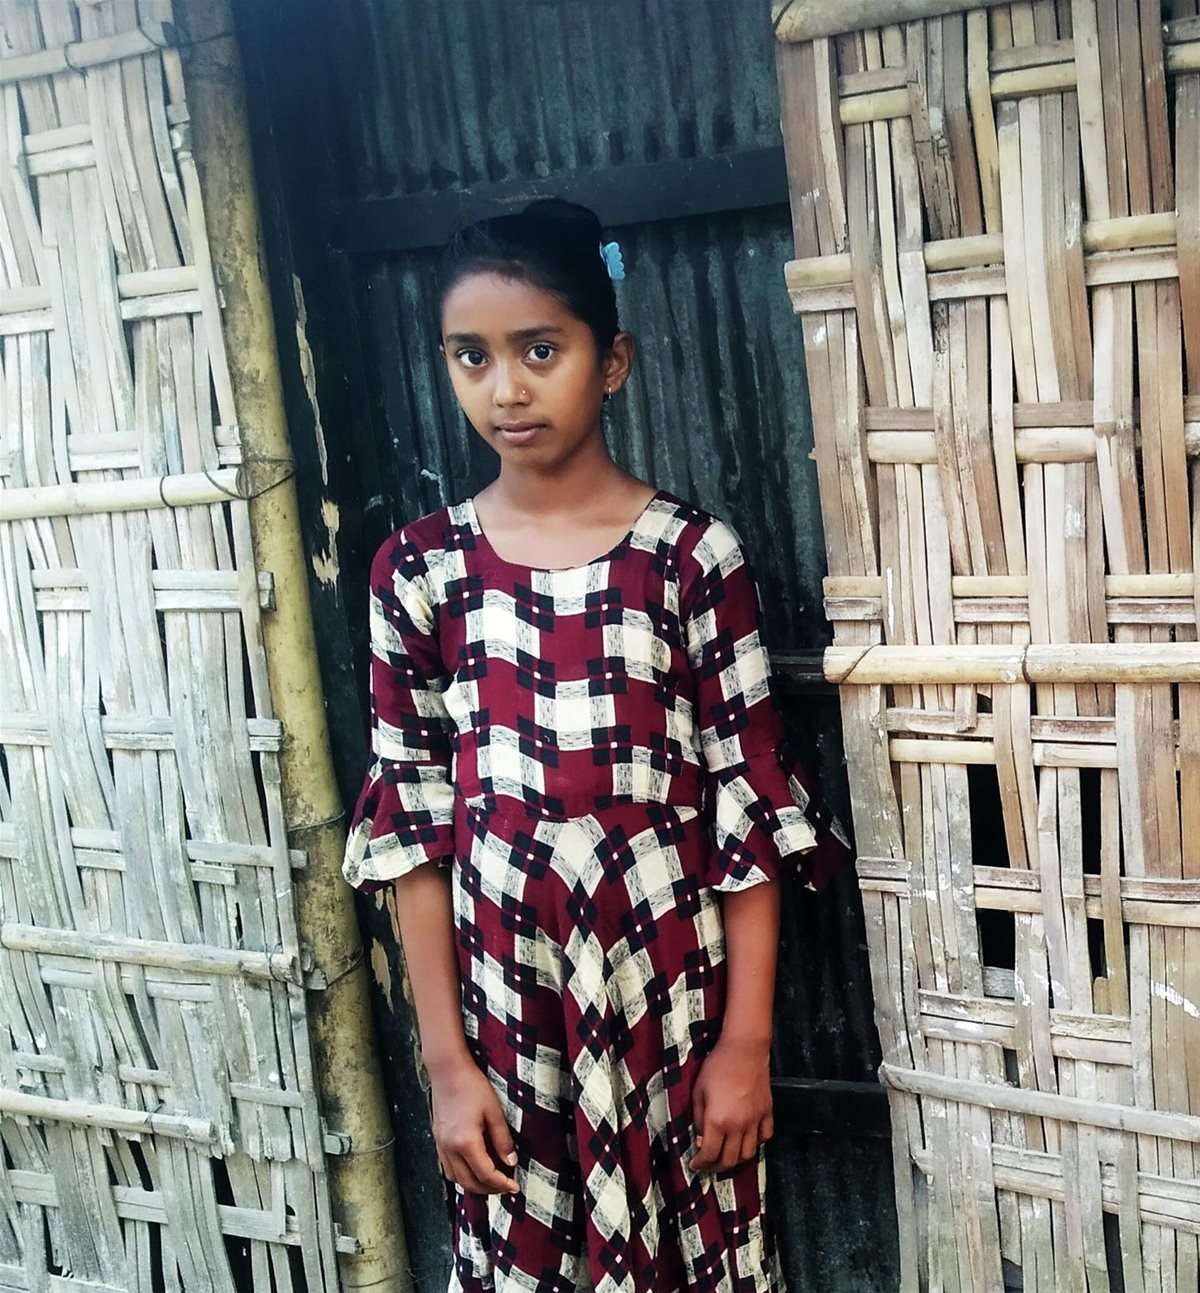 2021 portrait schoolgirl Bangladesh (626x674)